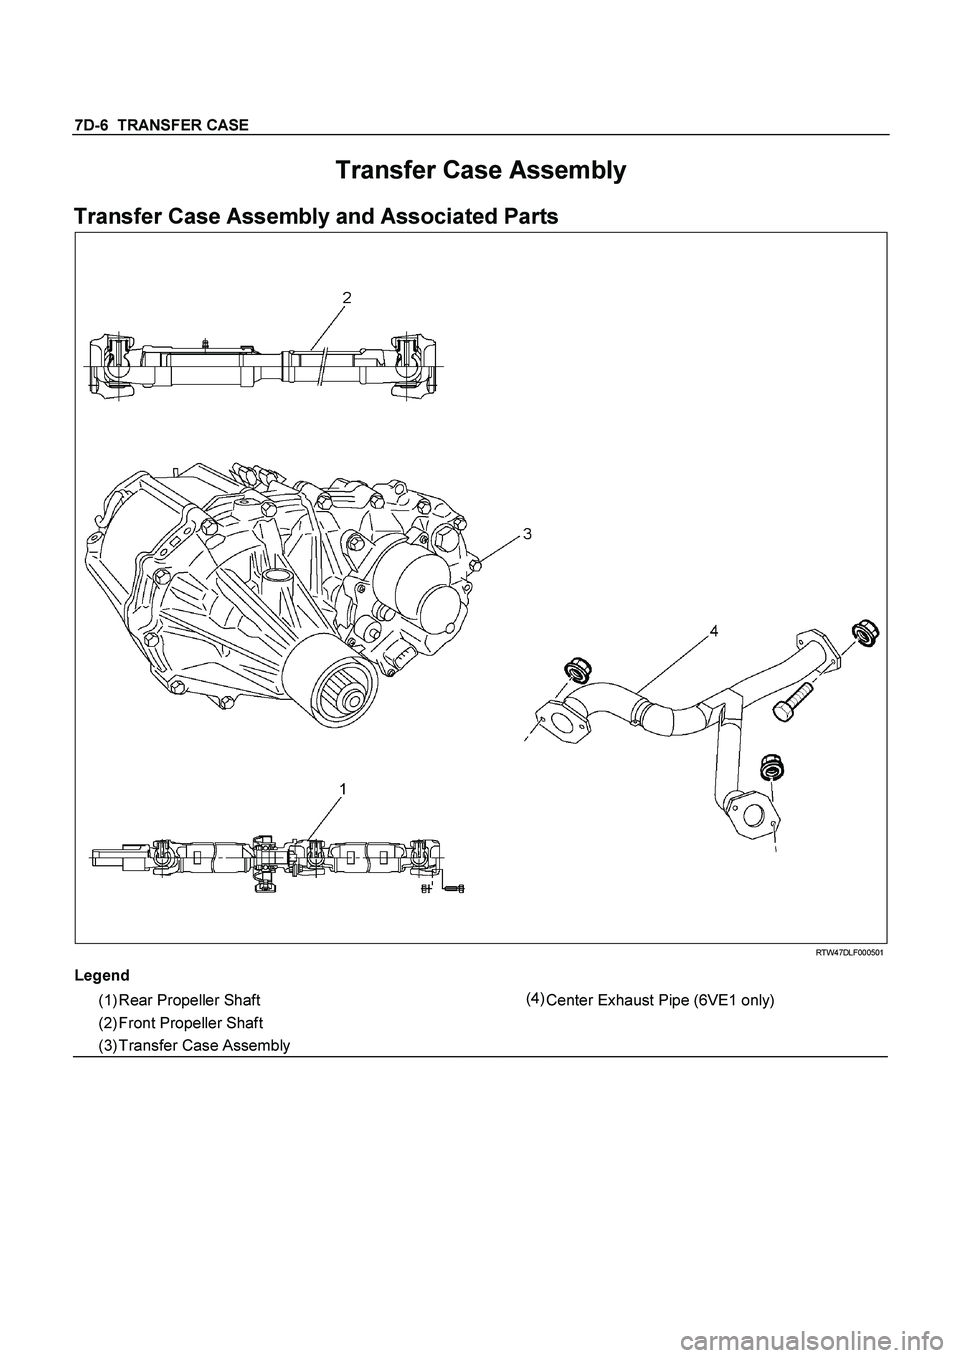 ISUZU TF SERIES 2004  Workshop Manual 7D-6  TRANSFER CASE
 
Transfer Case Assembly 
Transfer Case Assembly and Associated Parts 
  
 
 
 RTW47DLF000501 
Legend
 
  
(1) Rear Propeller Shaft 
 (4)
Center Exhaust Pipe (6VE1 only) 
(2) Front